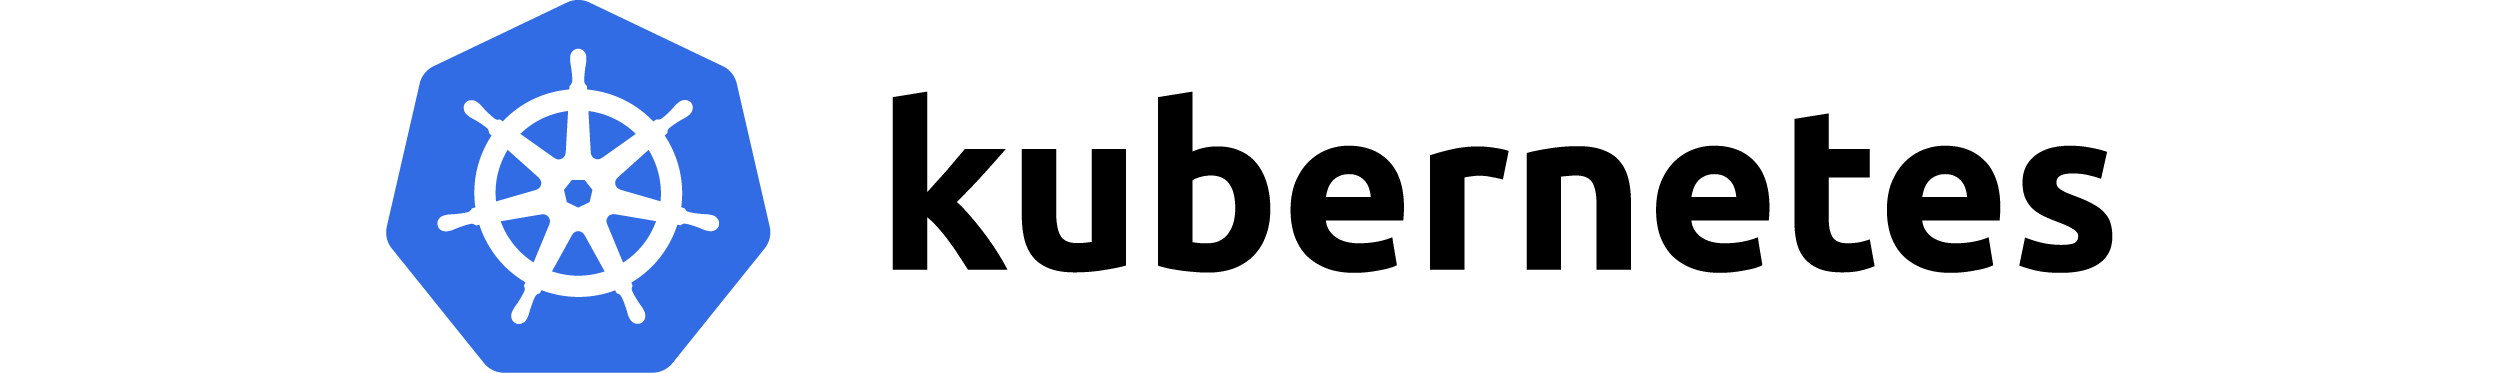 Kubernetes Logo Png Image | T